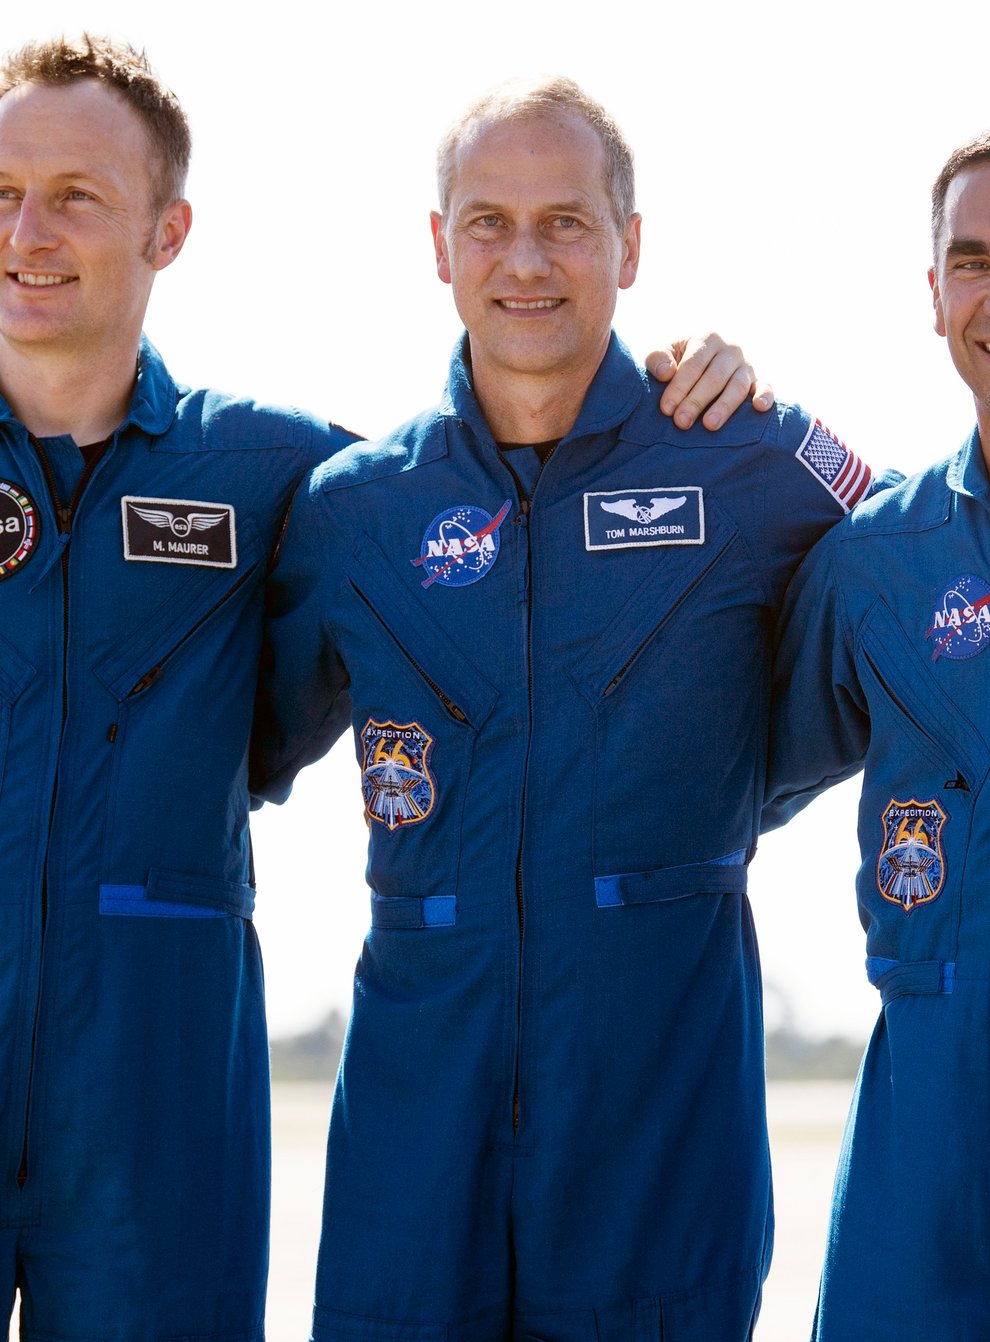 The spacecraft’s crew (Joel Kowsky/Nasa via AP)